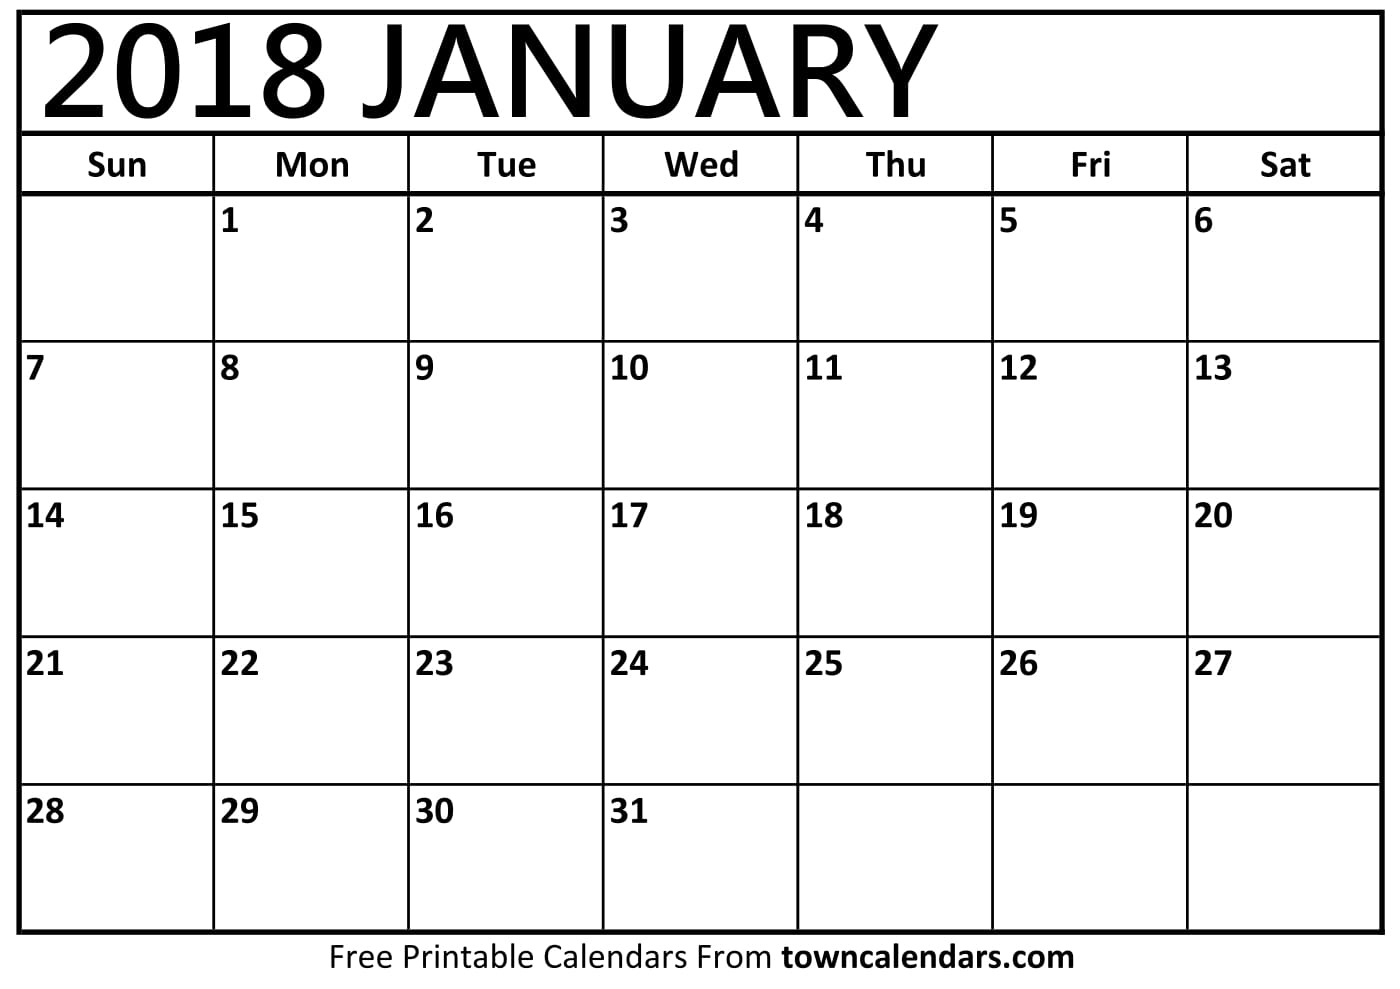 2018-calendar-printable-towncalendars